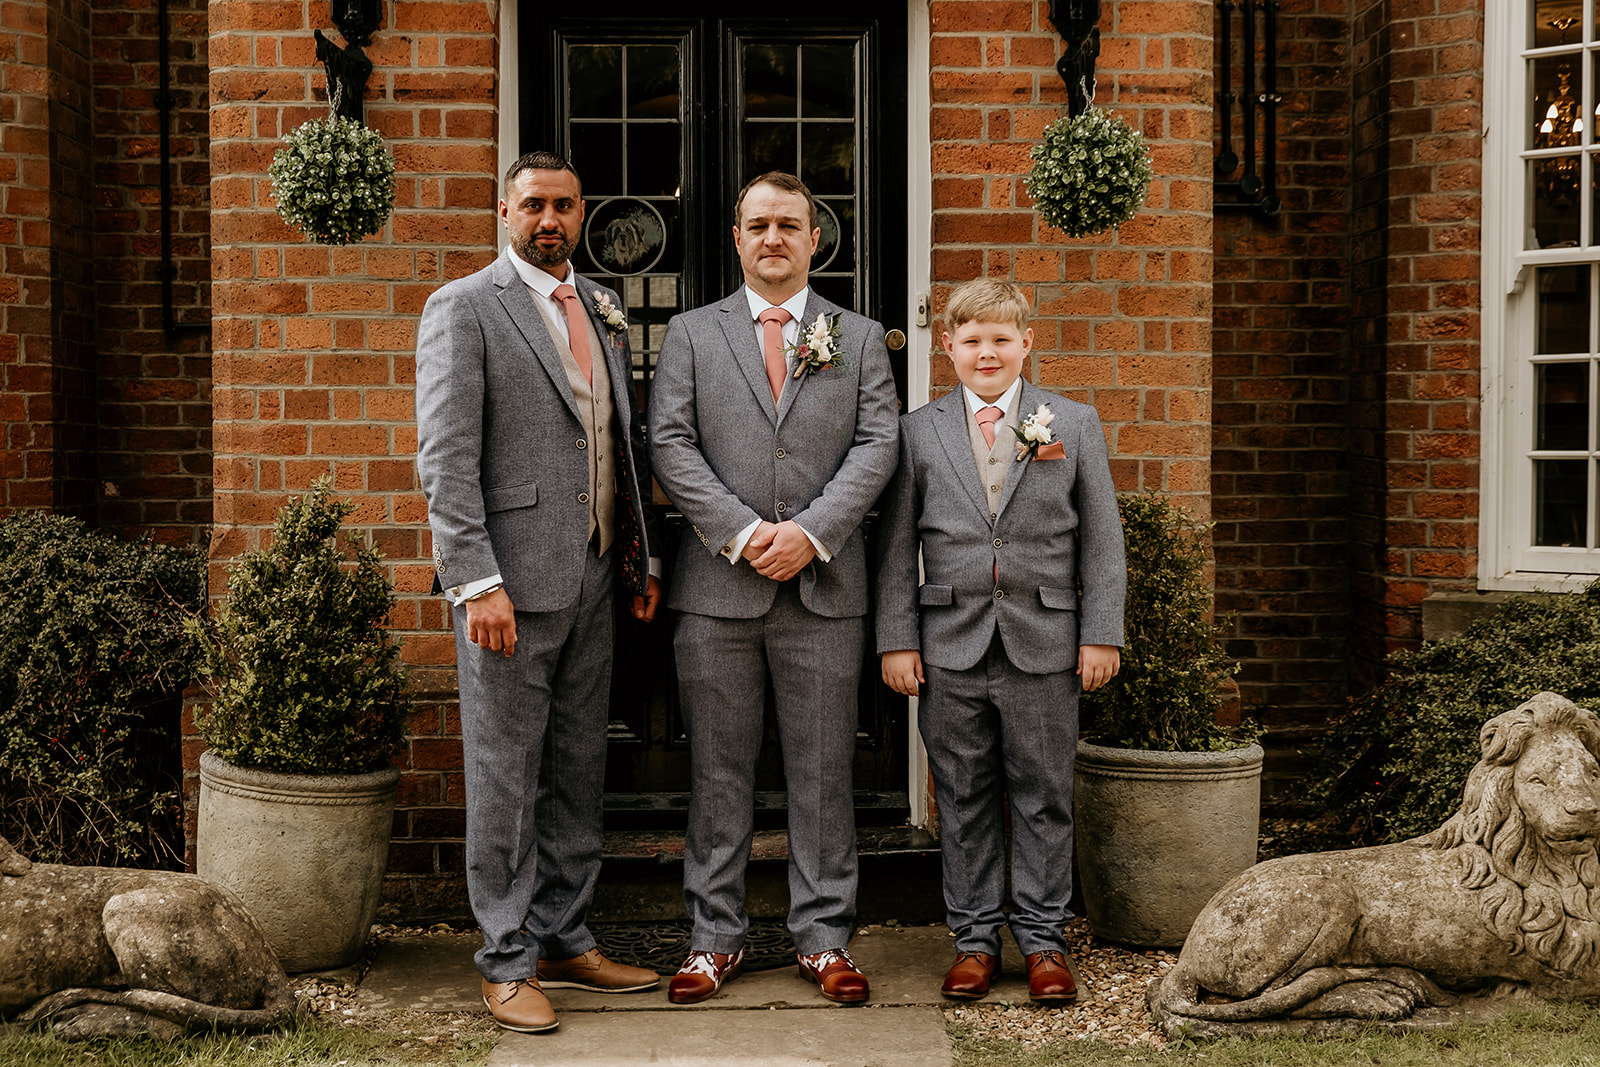 groom and groomsmen at swancar farm wedding venue